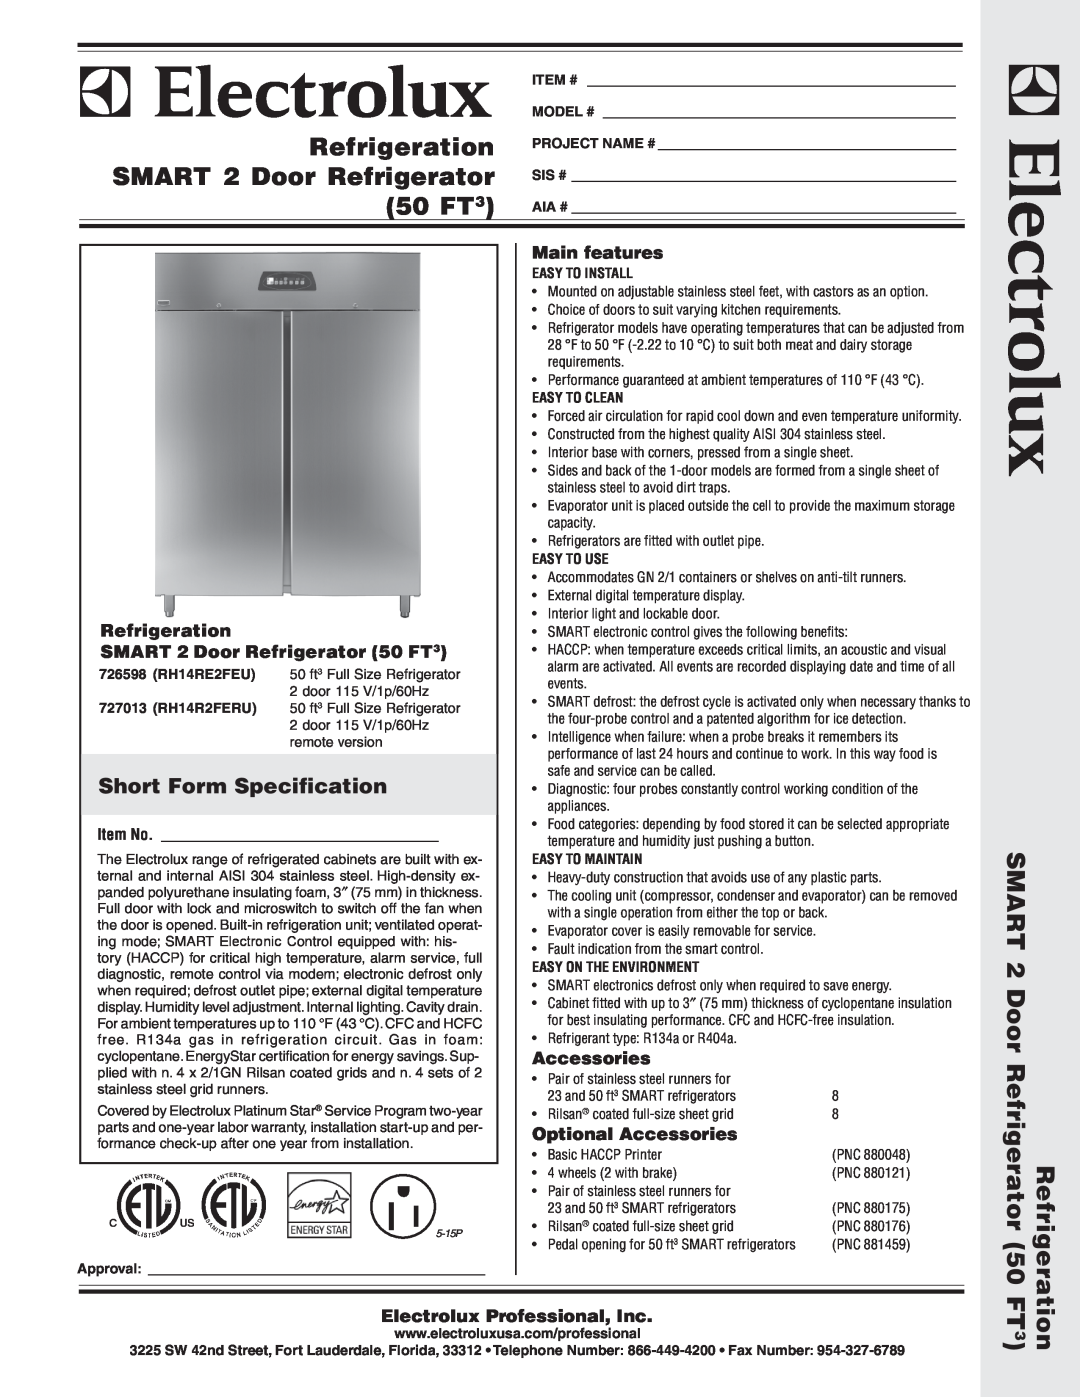 Electrolux 726598 warranty Short Form Specification, Main features, Refrigeration, SMART 2 Door Refrigerator 50 FT3 